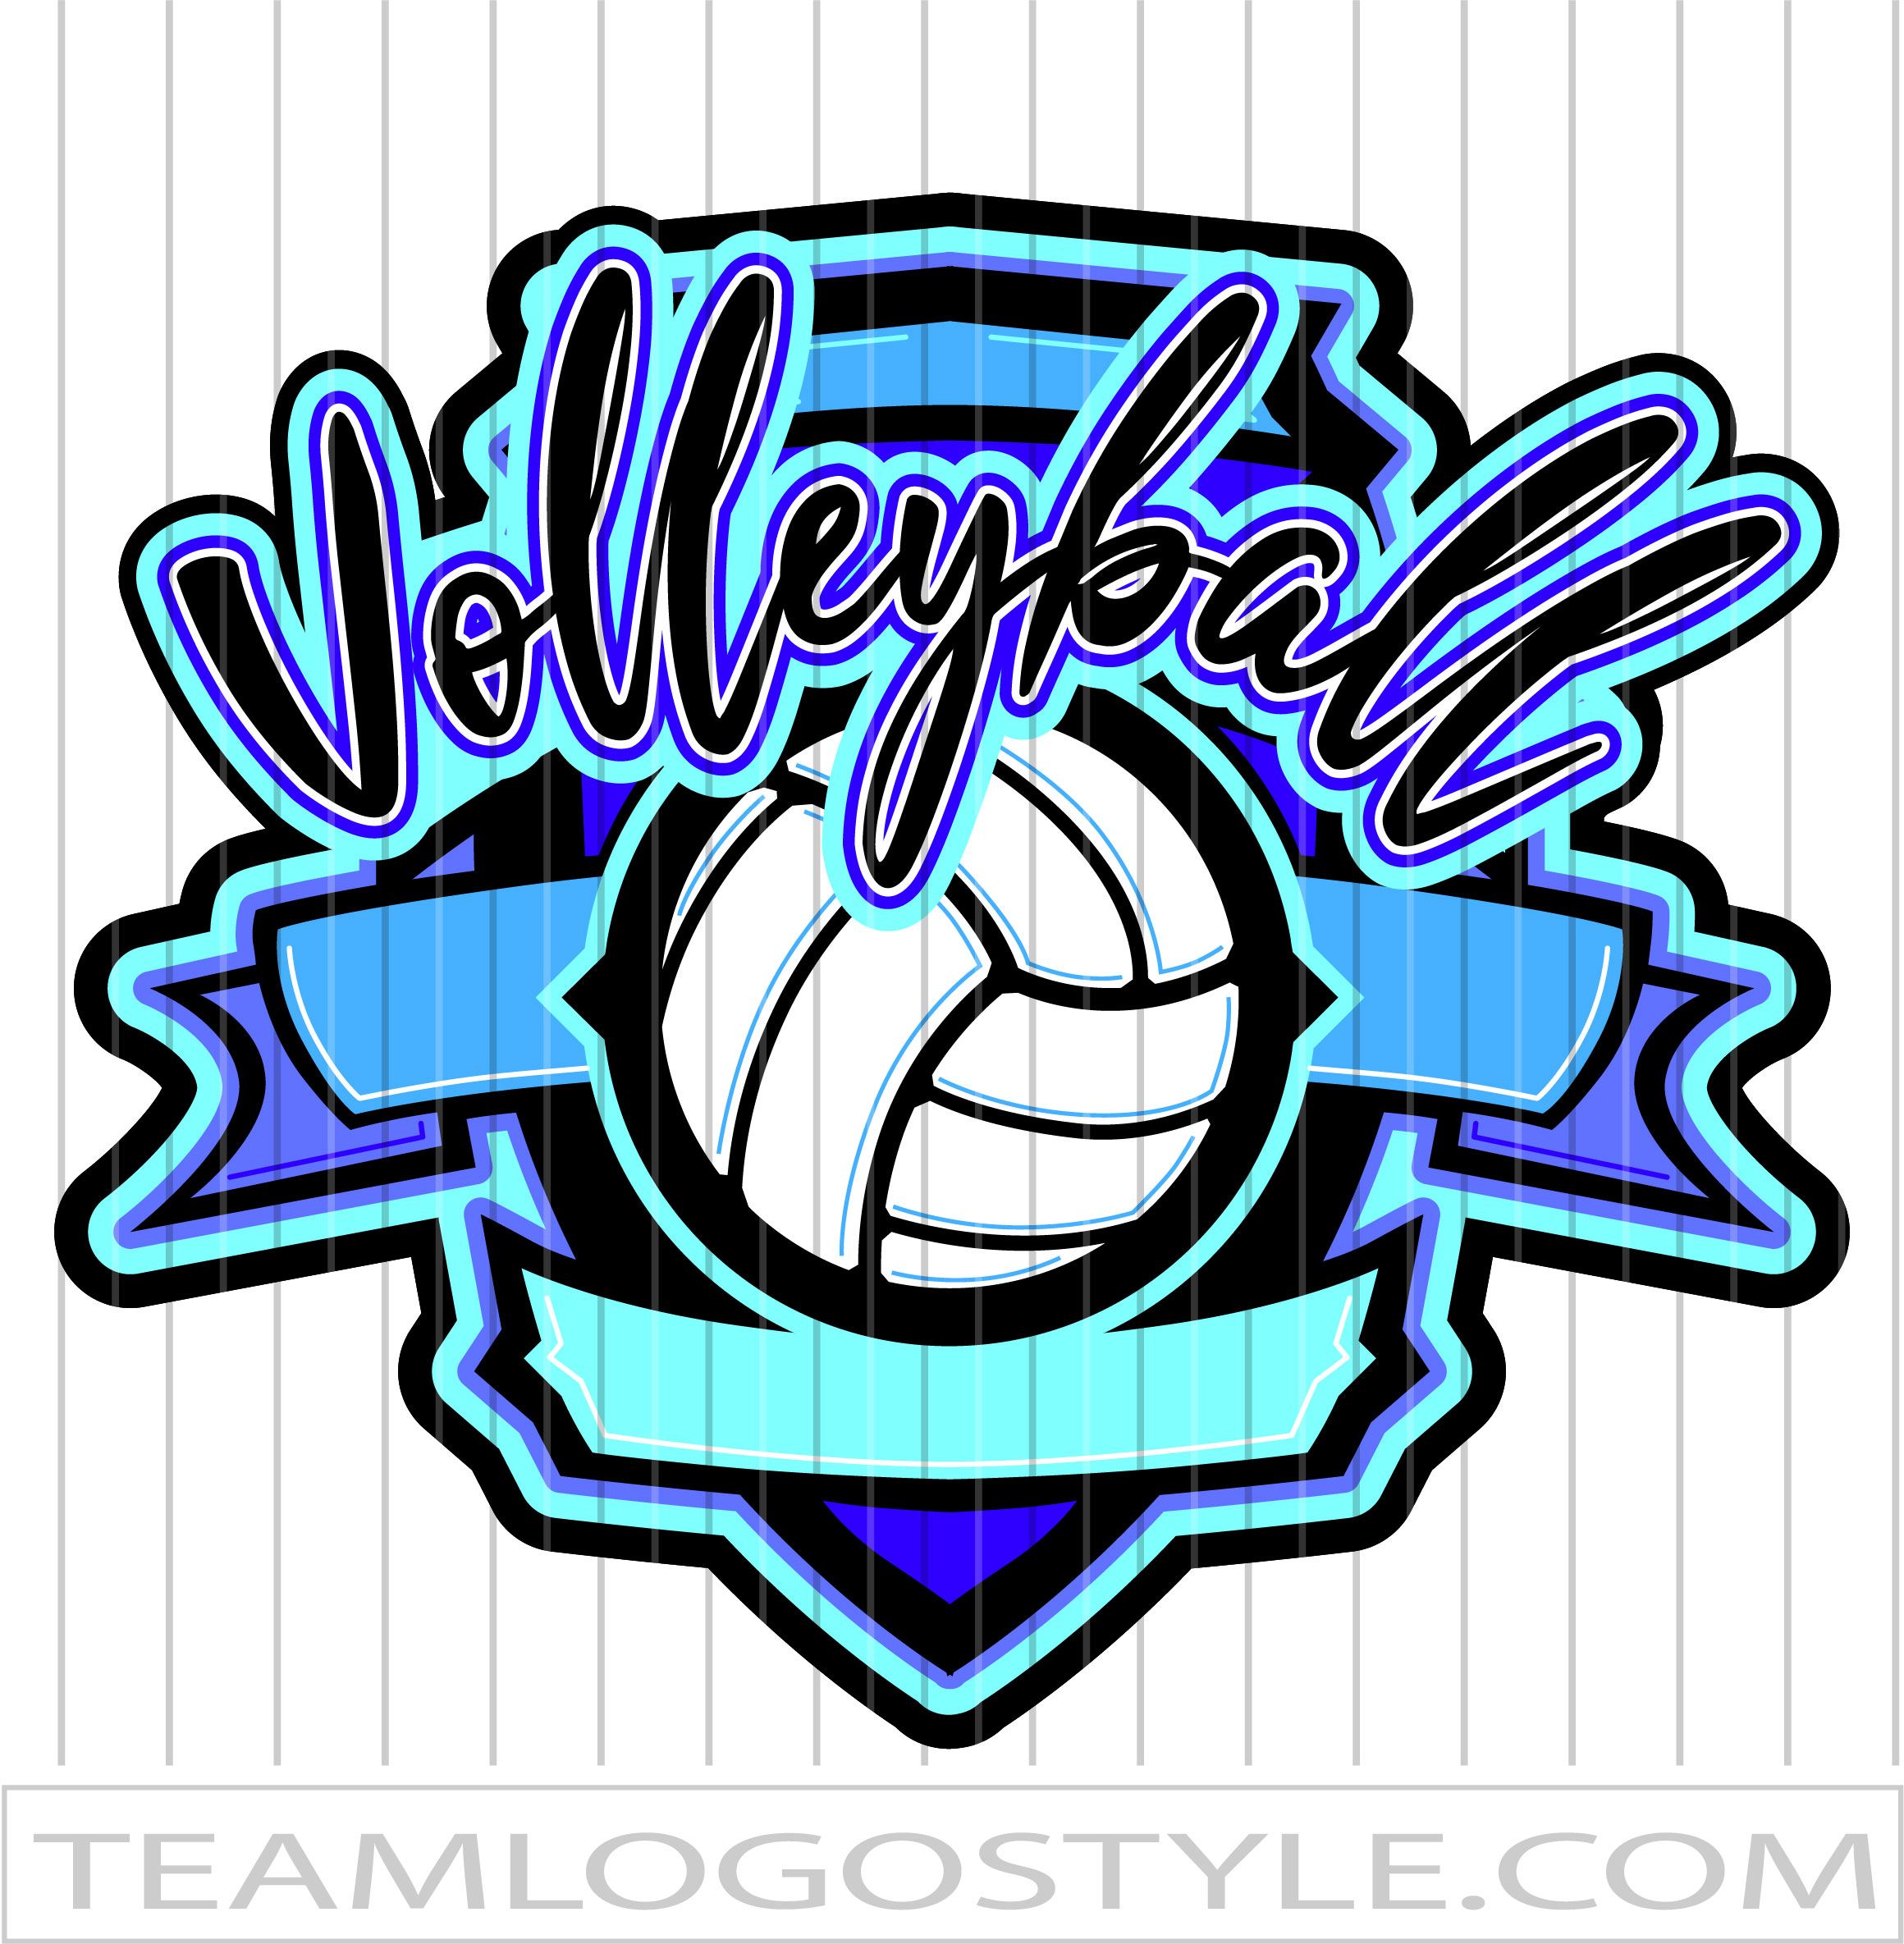 Volleyball Designs Logos